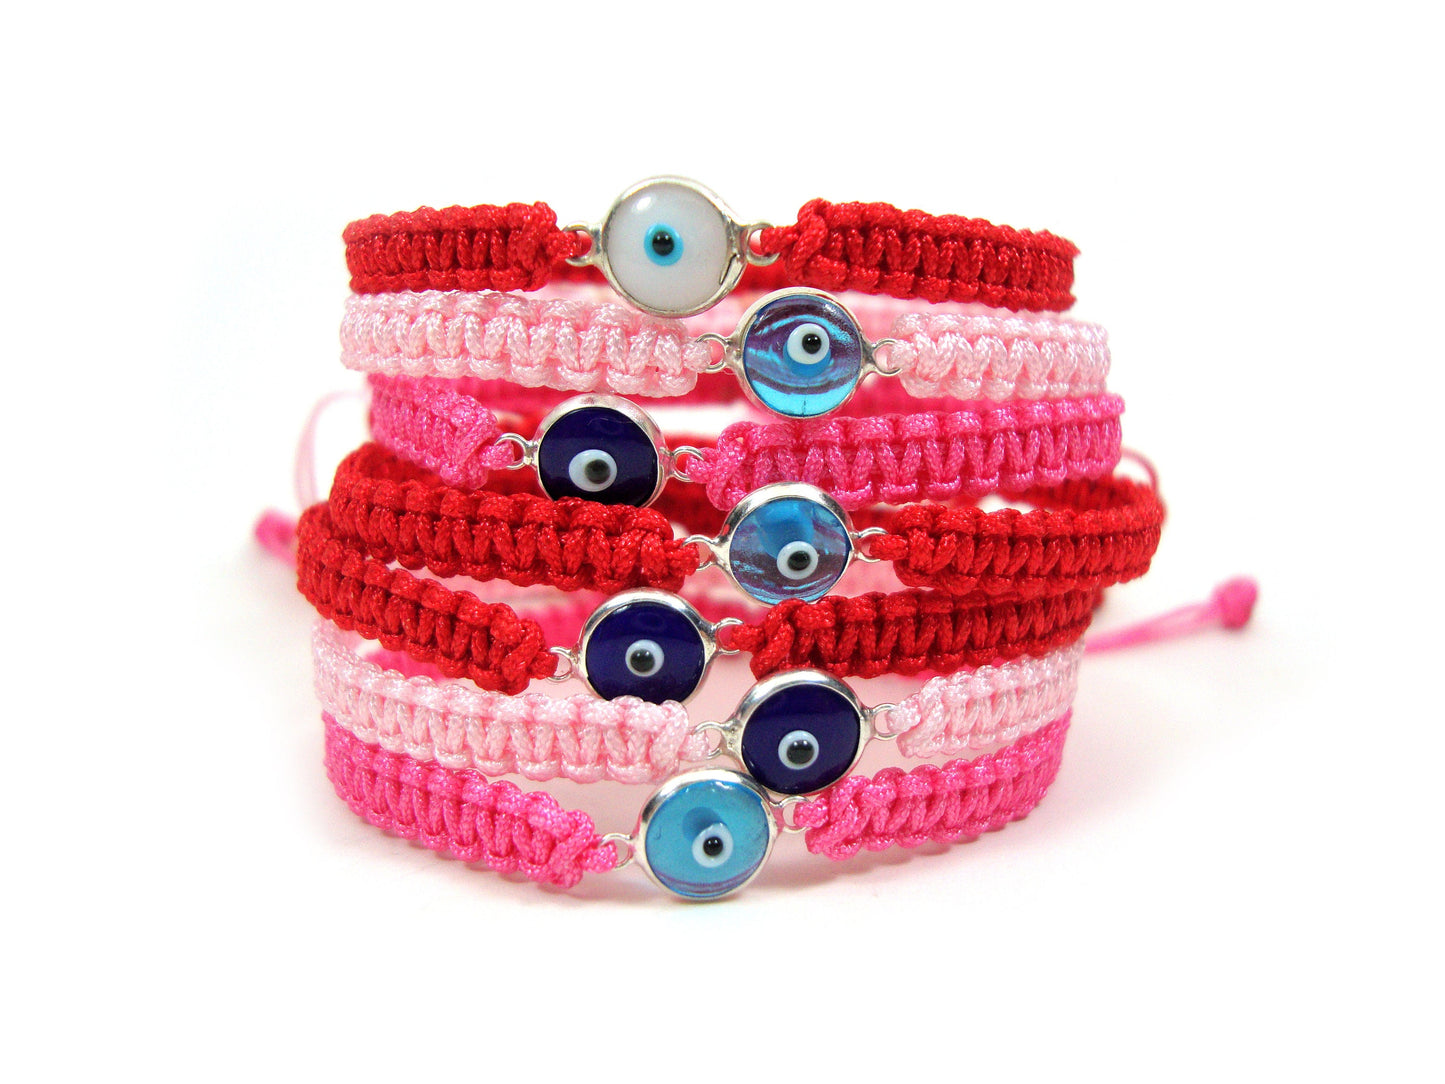 Evil Eye Armband, griechische Armbänder Viel Glück 7mm handgemachtes verstellbares rotes rosa Makramee-Armband, blaues Evil Eye Kinderarmband, Bijoux Grecque,